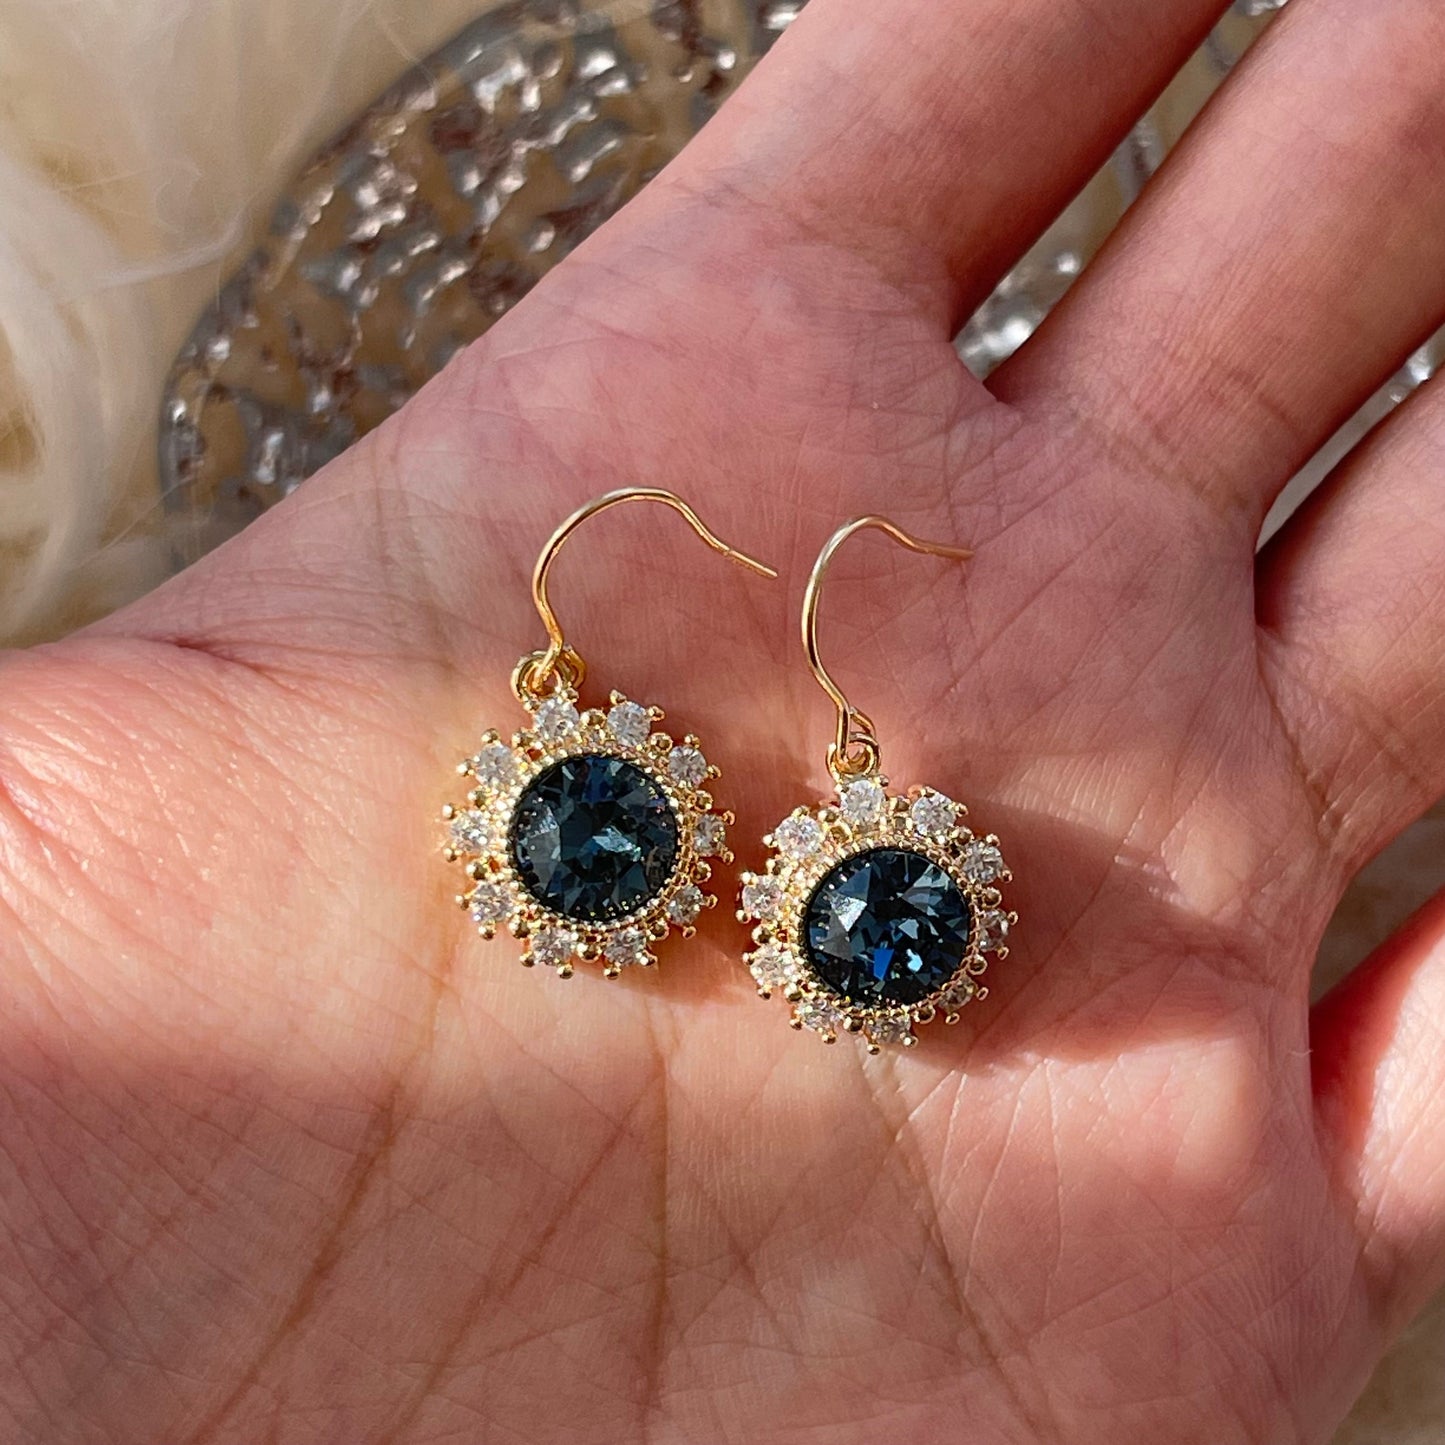 Luxury Sapphire Earrings, Blue Gemstone Drop Earrings, Dainty 14K Gold Lace Earrings, Blue Topaz Earrings, Birthday Bridesmaid Wedding Gift